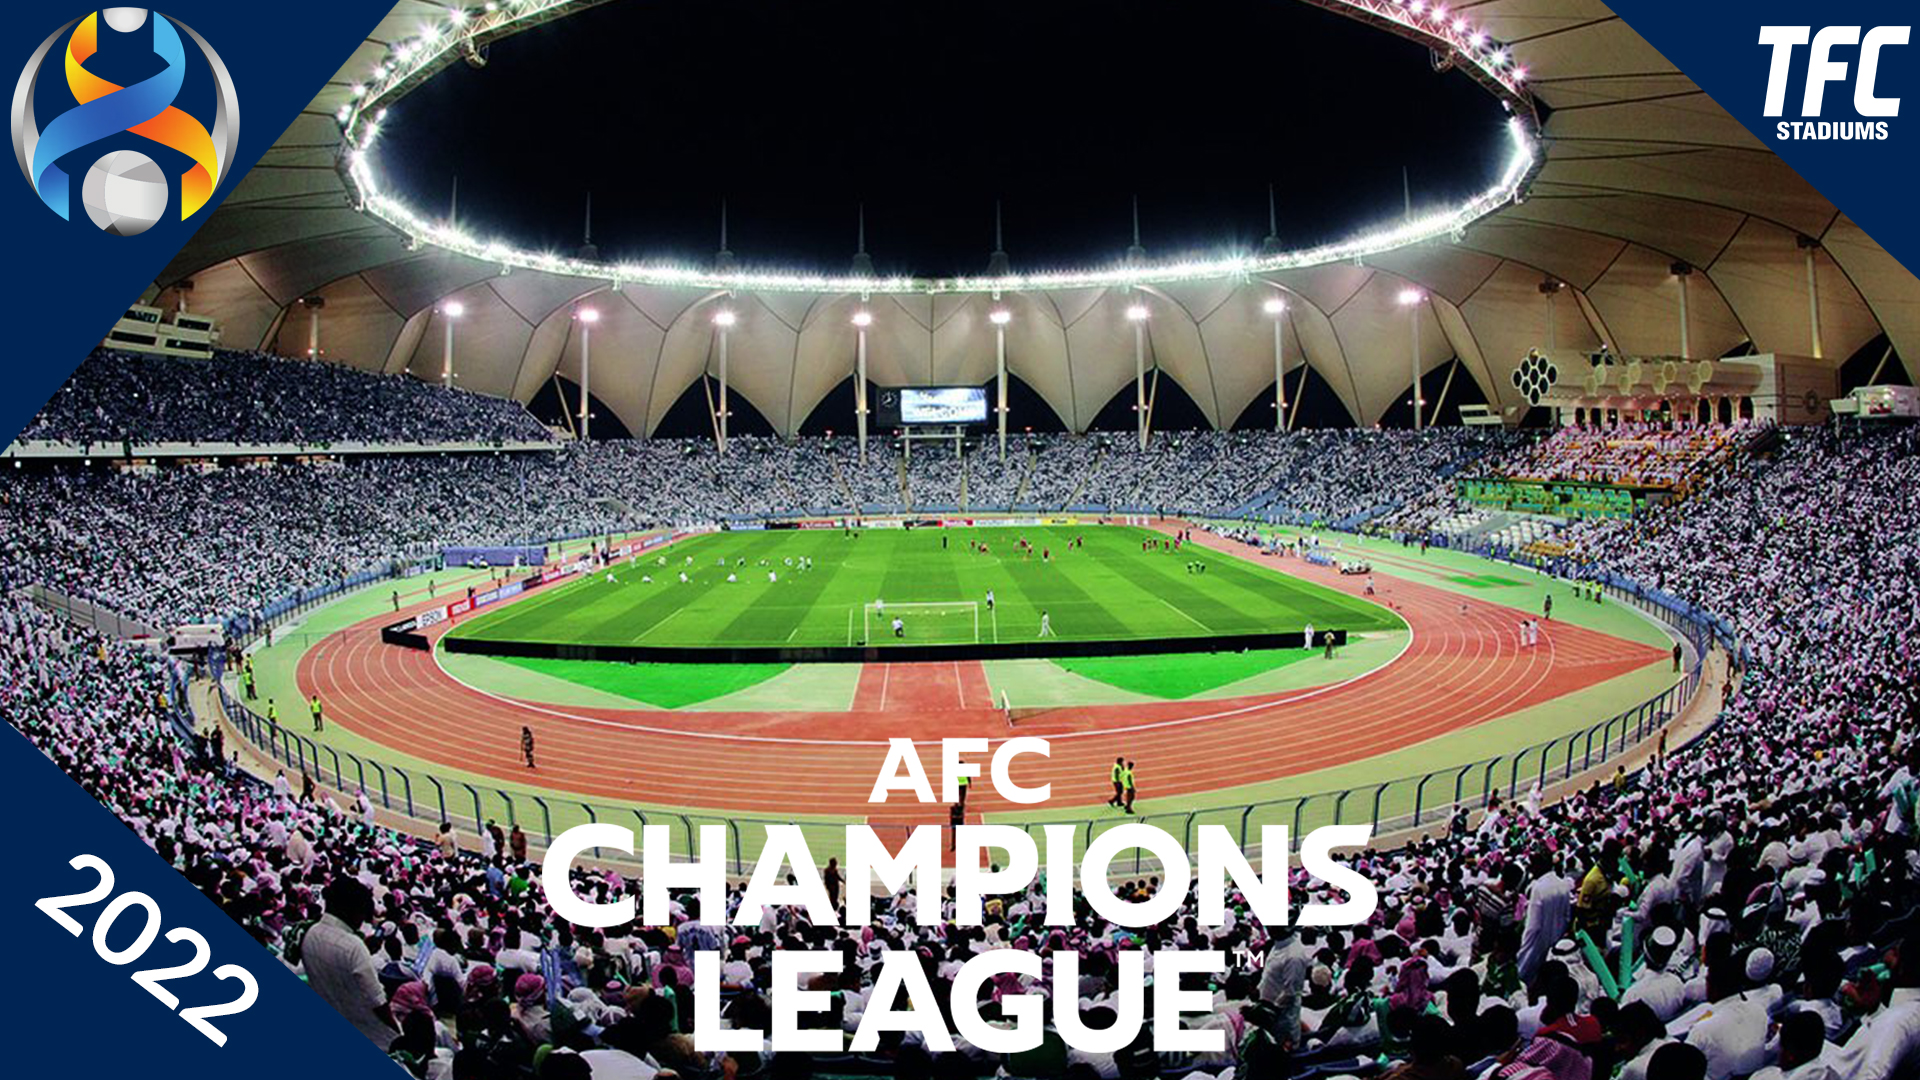 AFC Champions League 2022 Stadiums - TFC Stadiums